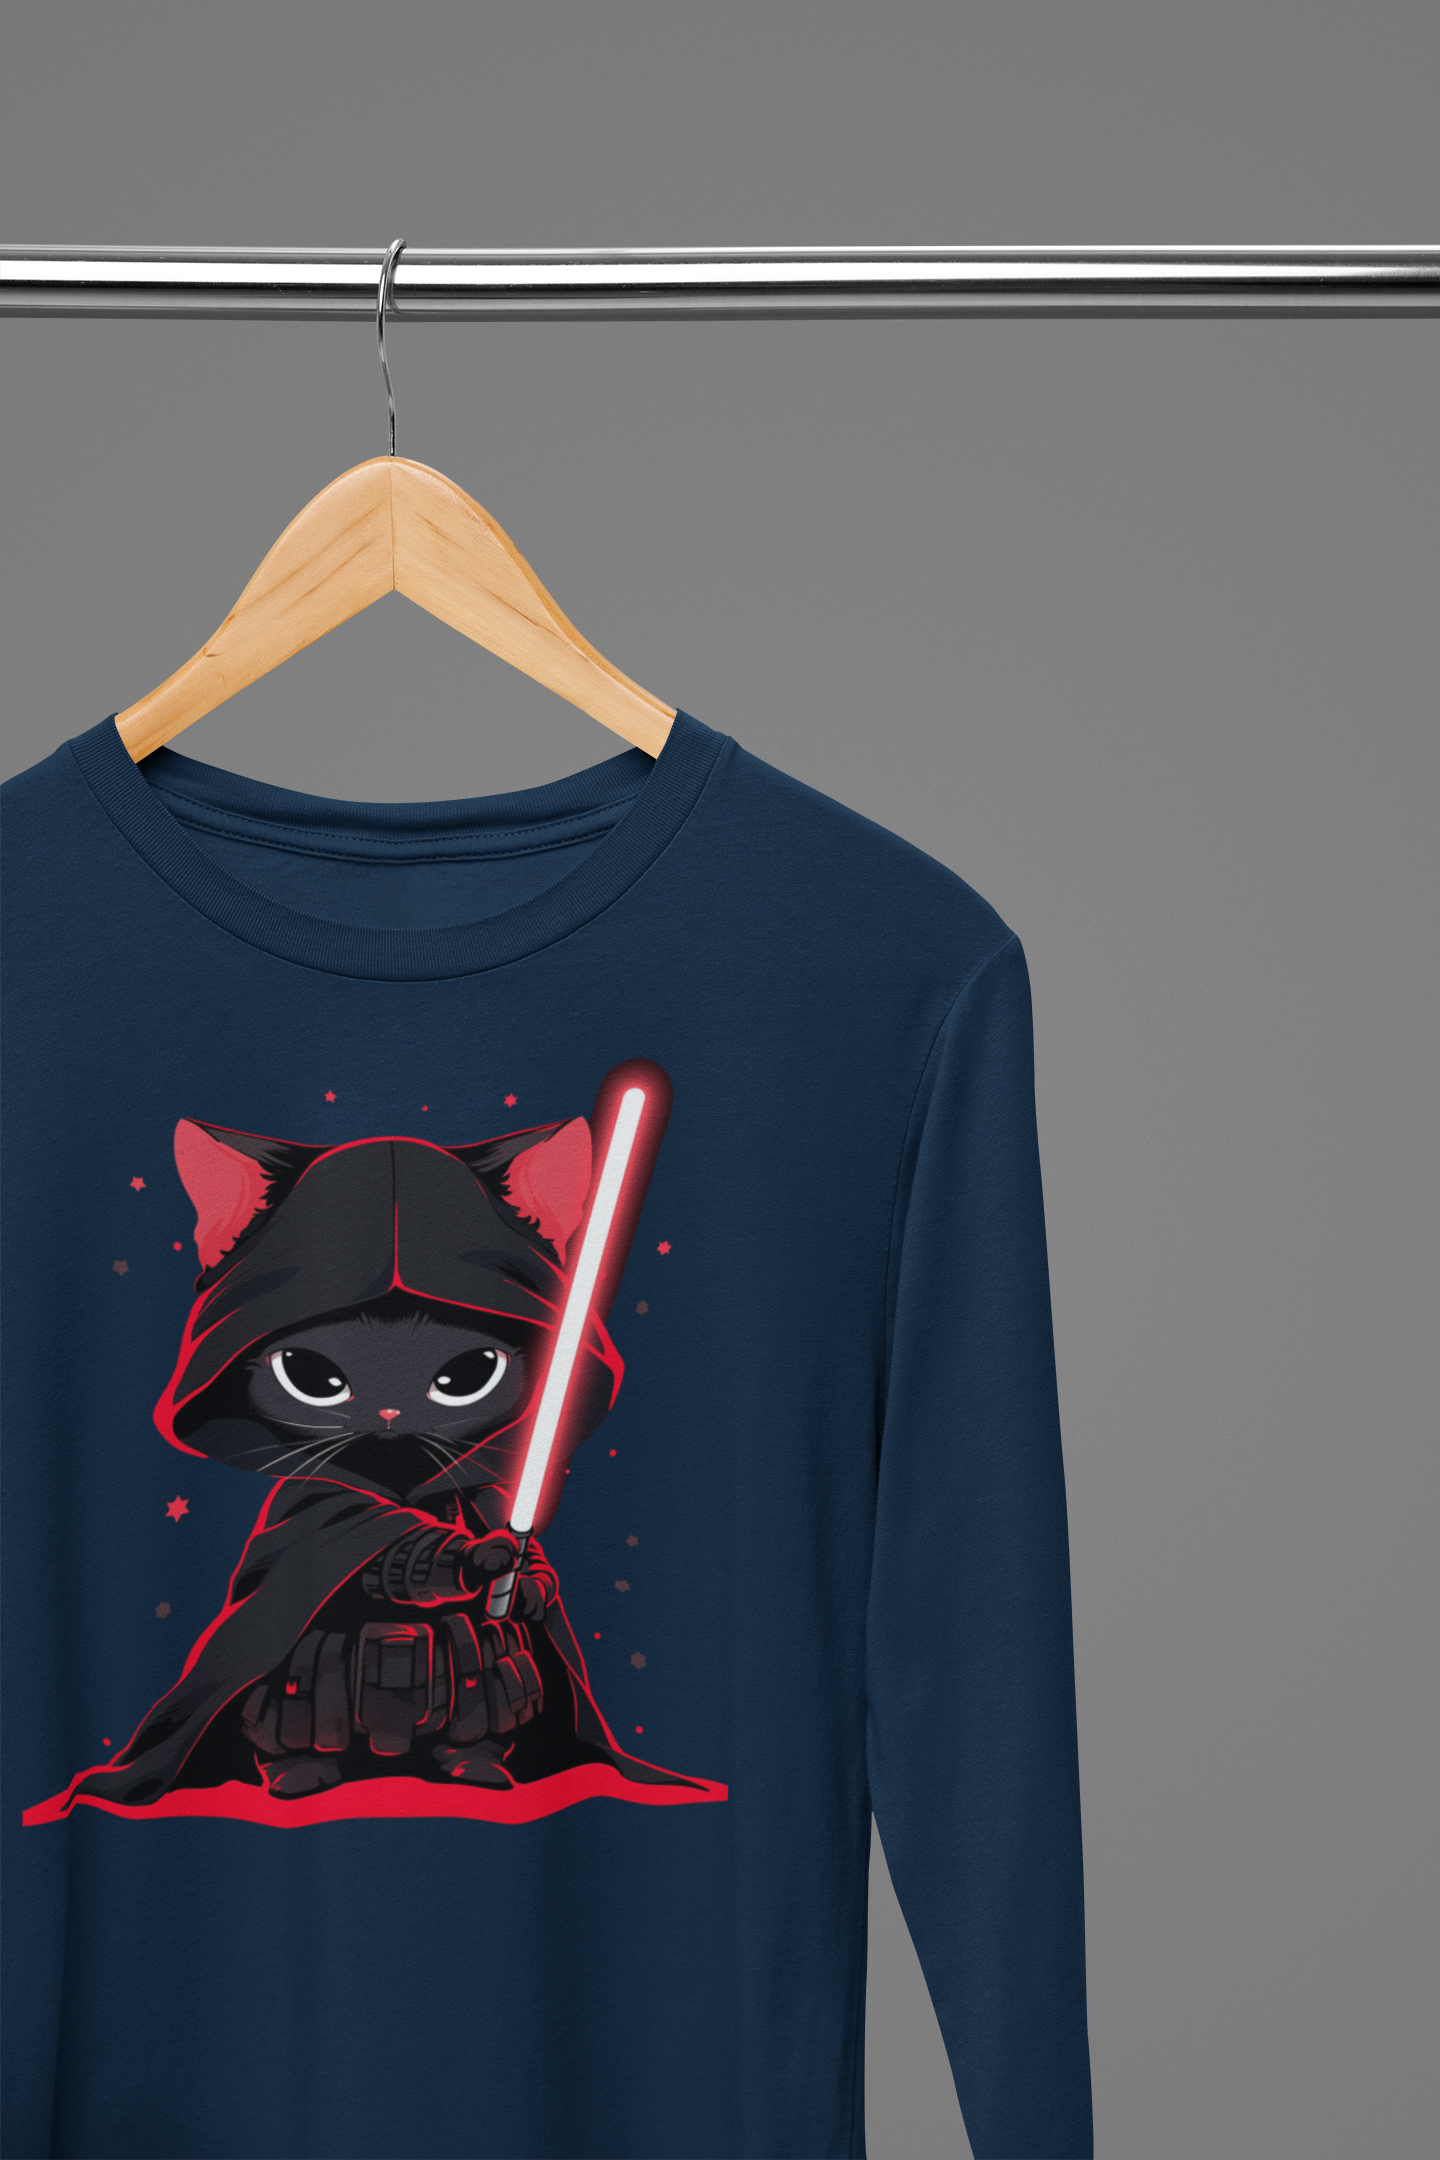 Cat Vader Long Sleeve Tee: Embrace the Feline Dark Side!